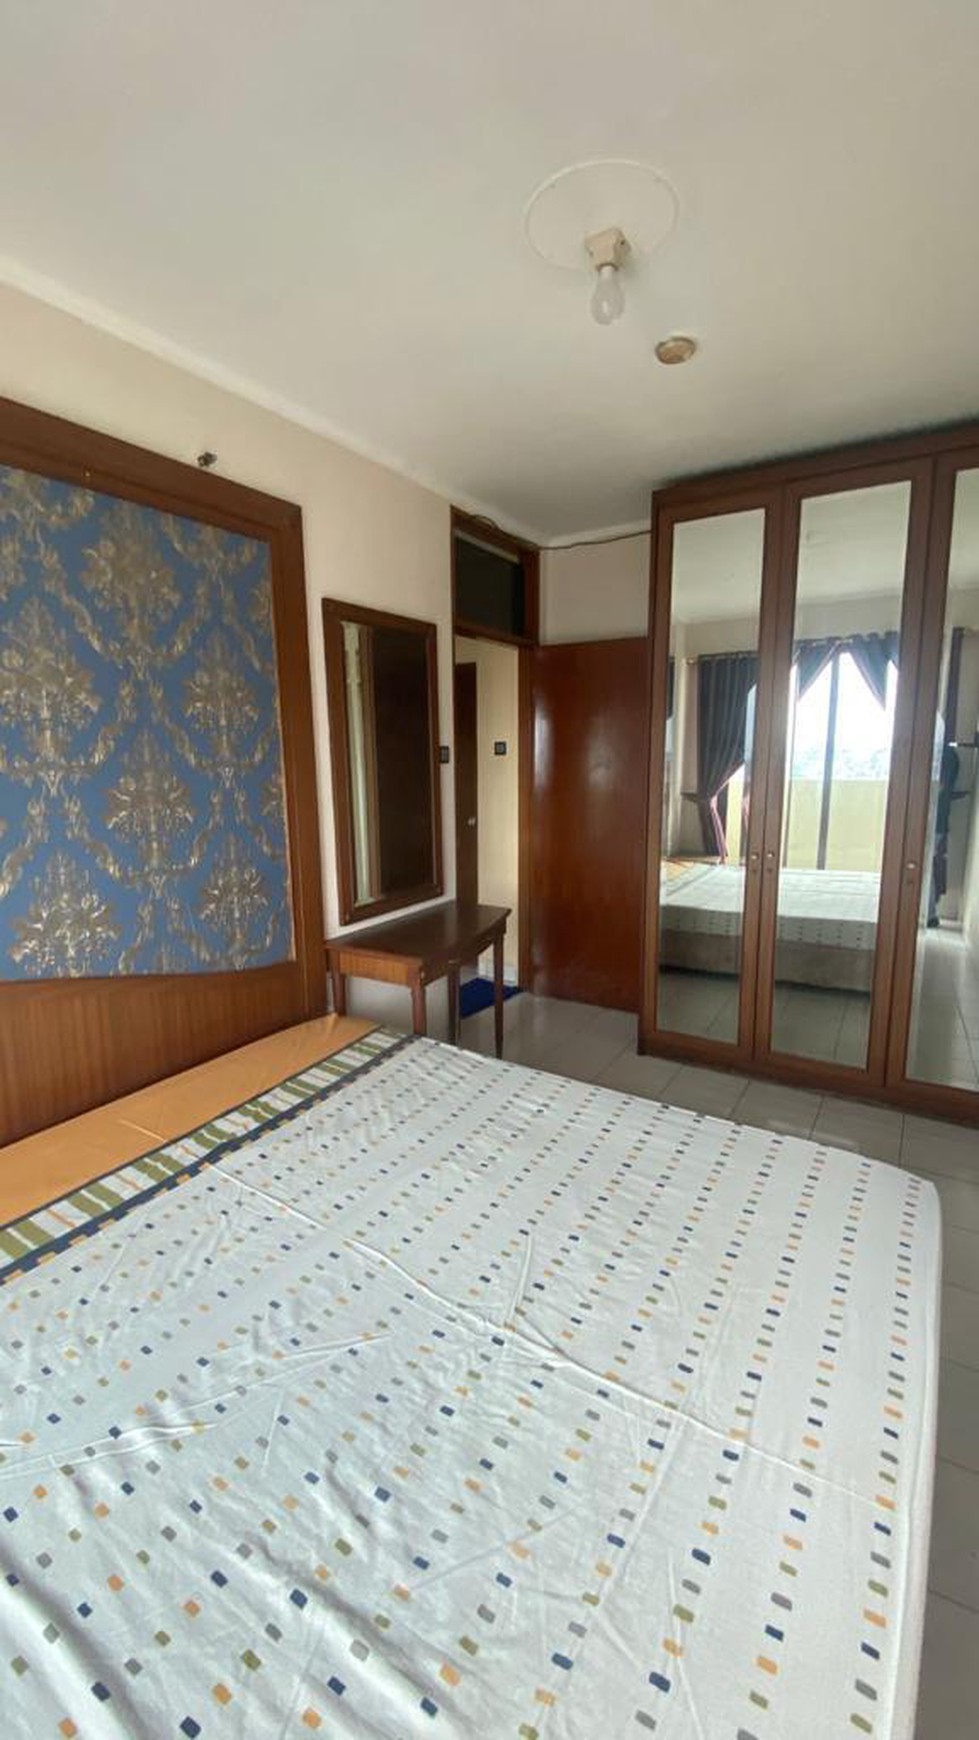 Dijual Apt Cempaka Mas Jakarta Pusat Luas 74 m2 tipe 2+1 kamar tidur semi furnish bisa KPA